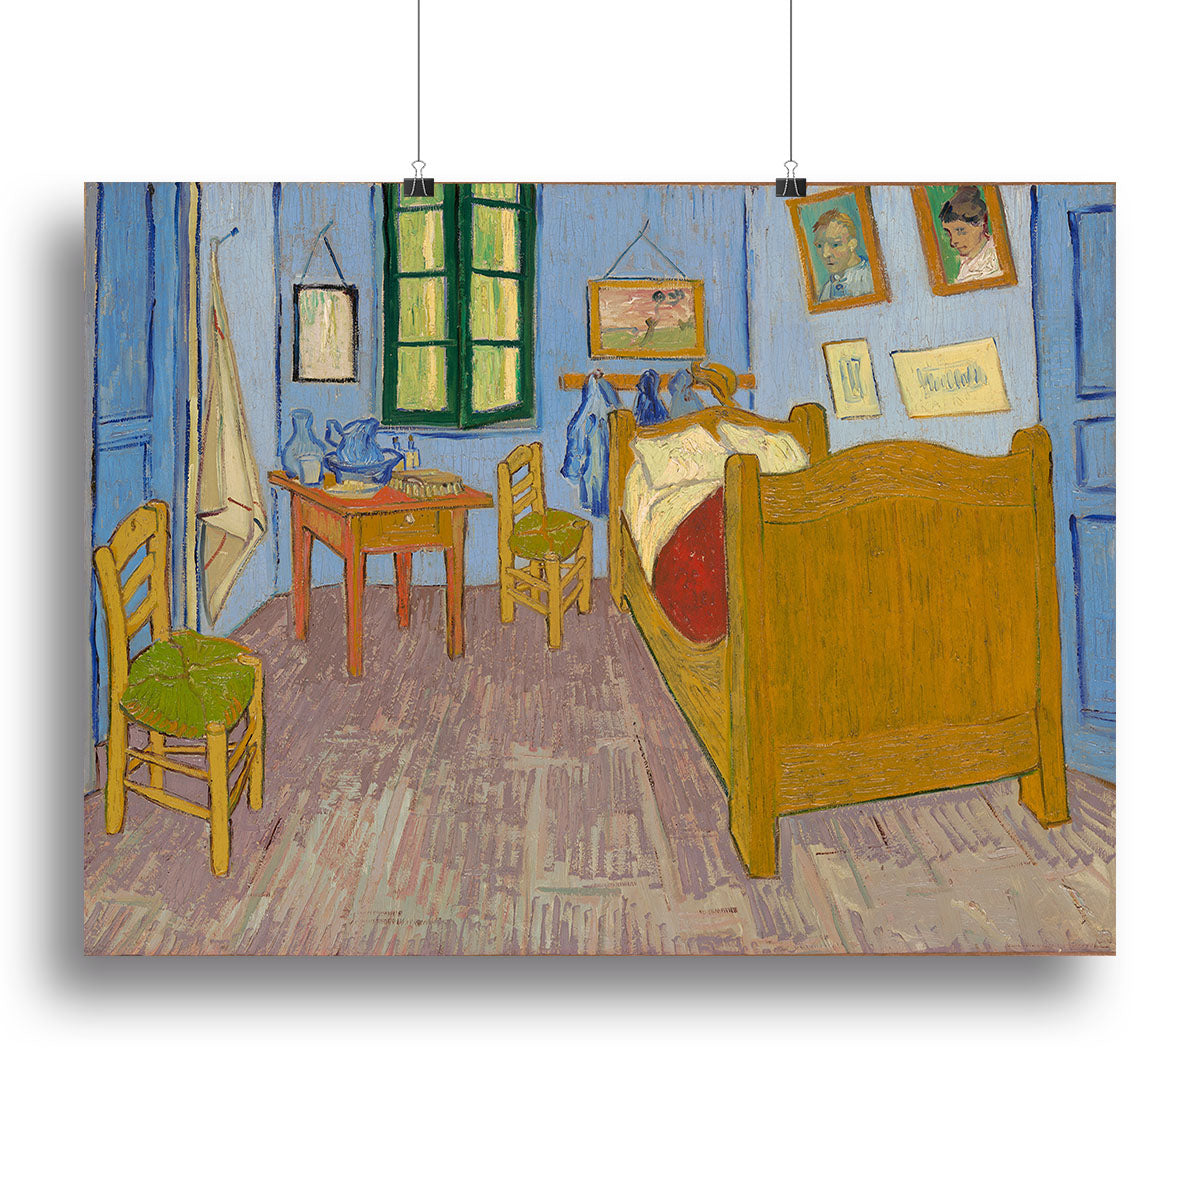 Vincents bedroom at Arles Canvas Print or Poster - Canvas Art Rocks - 2